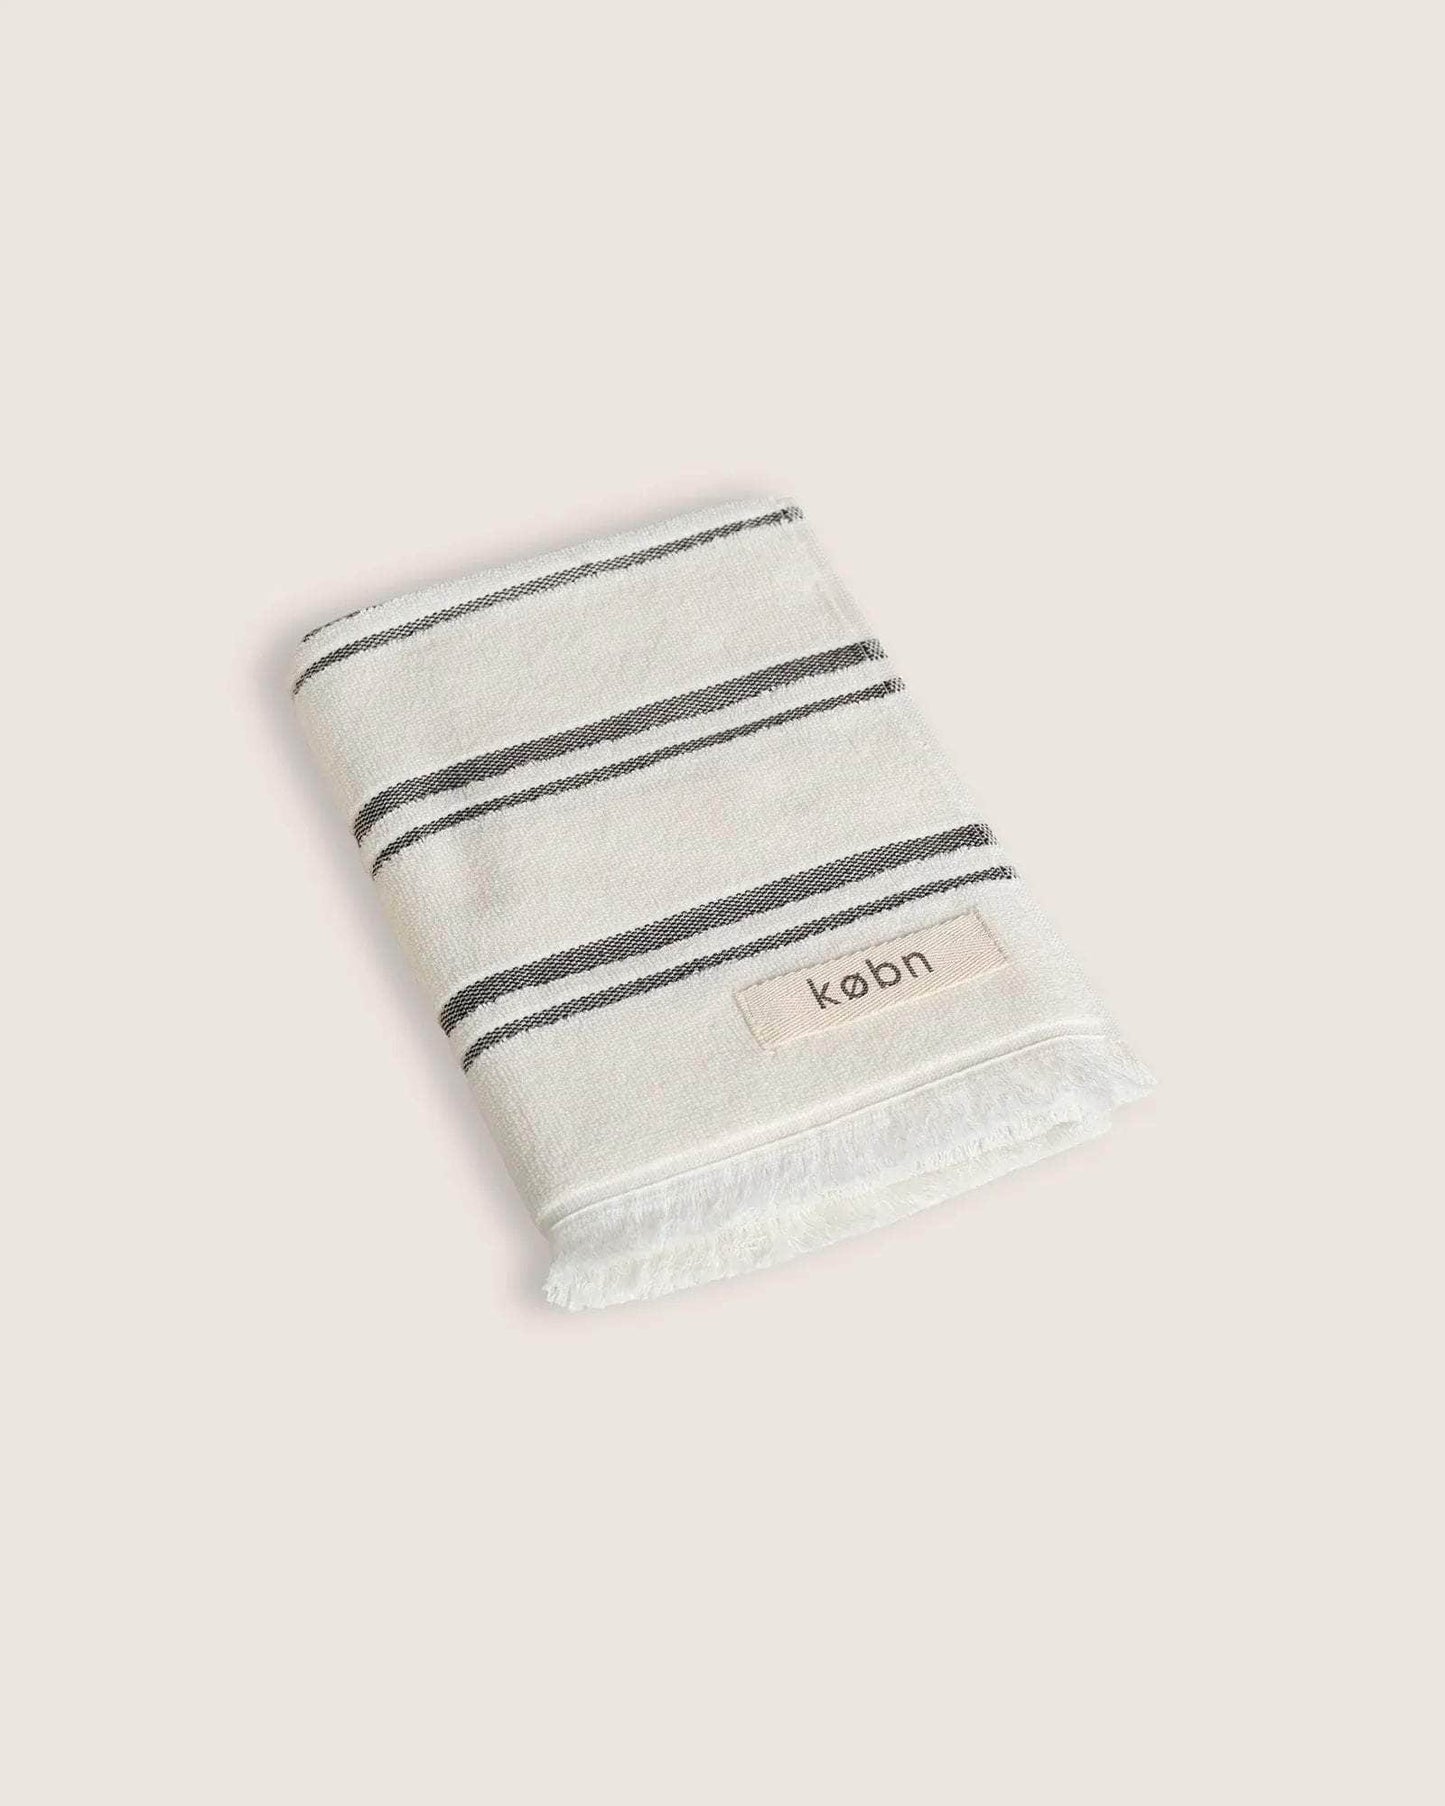 Købn Crema Hand Towel *ON SALE FOR A LIMITED TIME. OFFER ENDS 07 APRIL, 11:59 AEST*